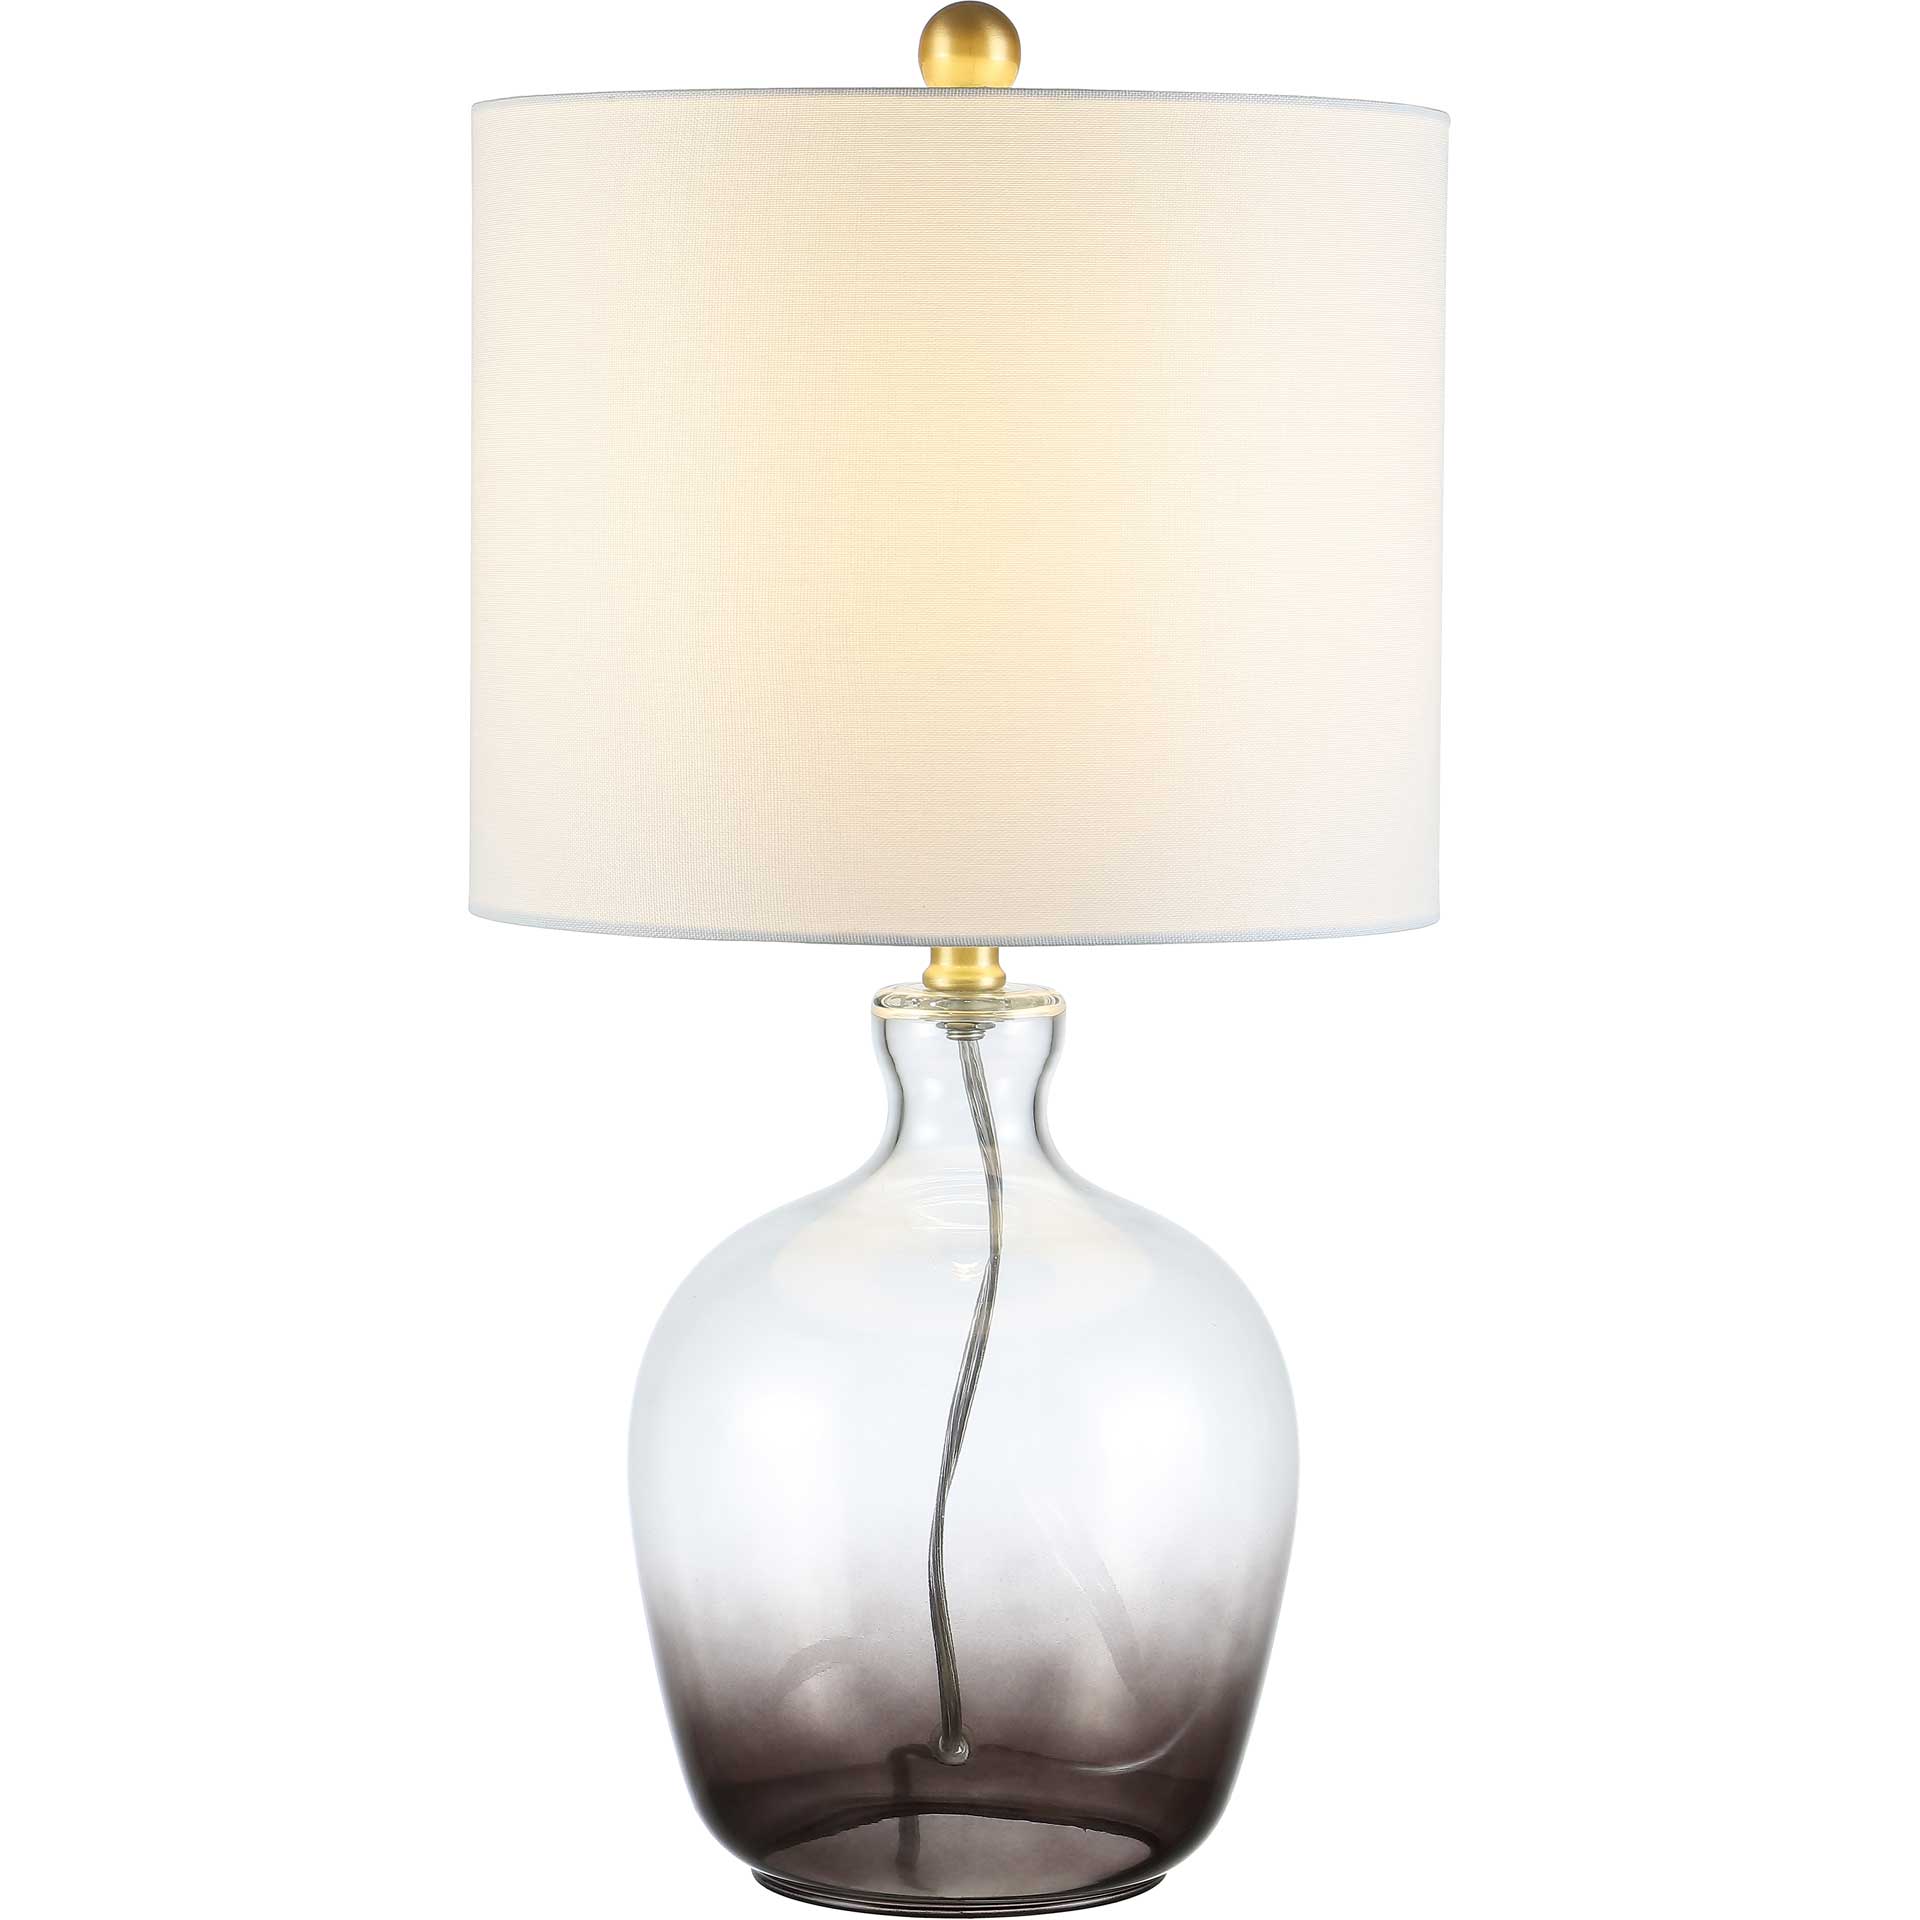 Remmi Table Lamp Ombre Gray